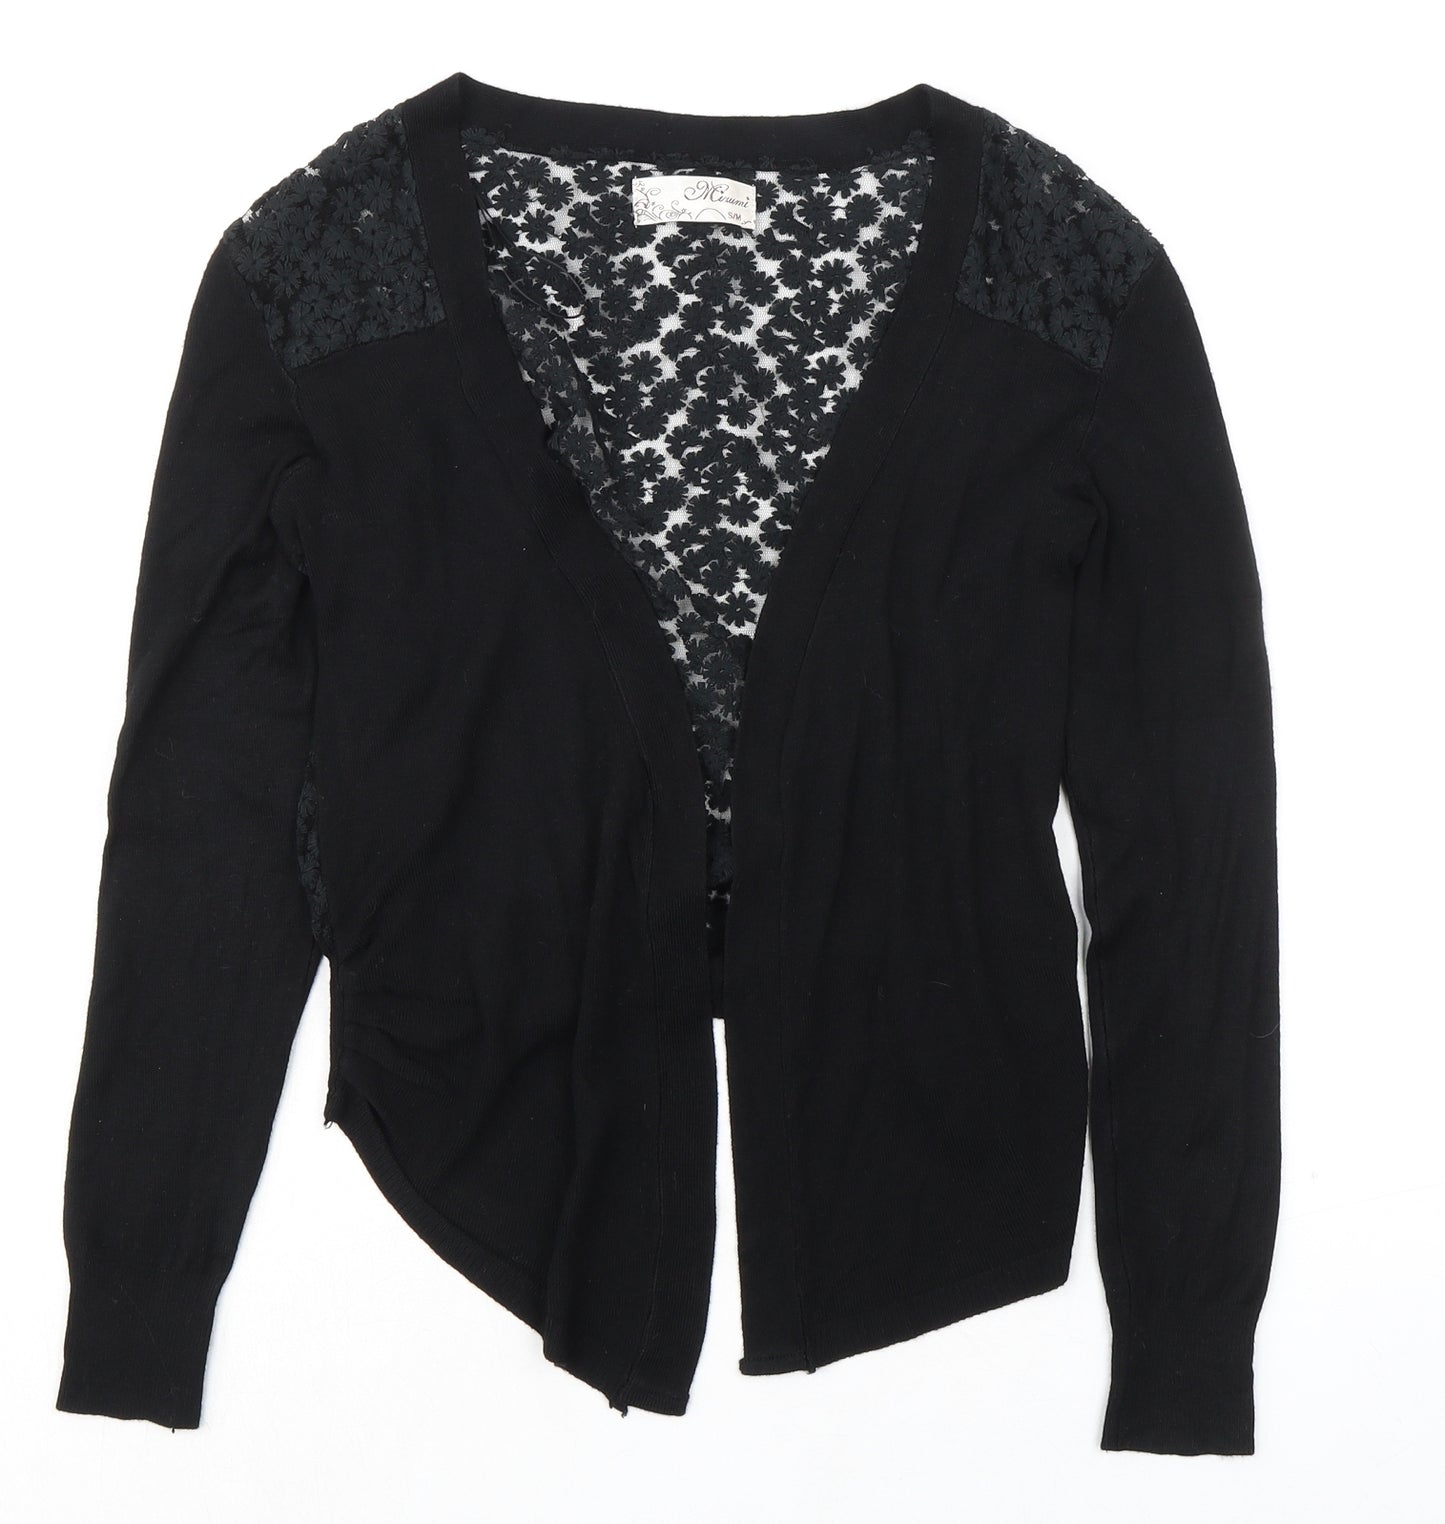 Misumi Womens Black V-Neck 100% Cotton Cardigan Jumper Size S - Lace Detail